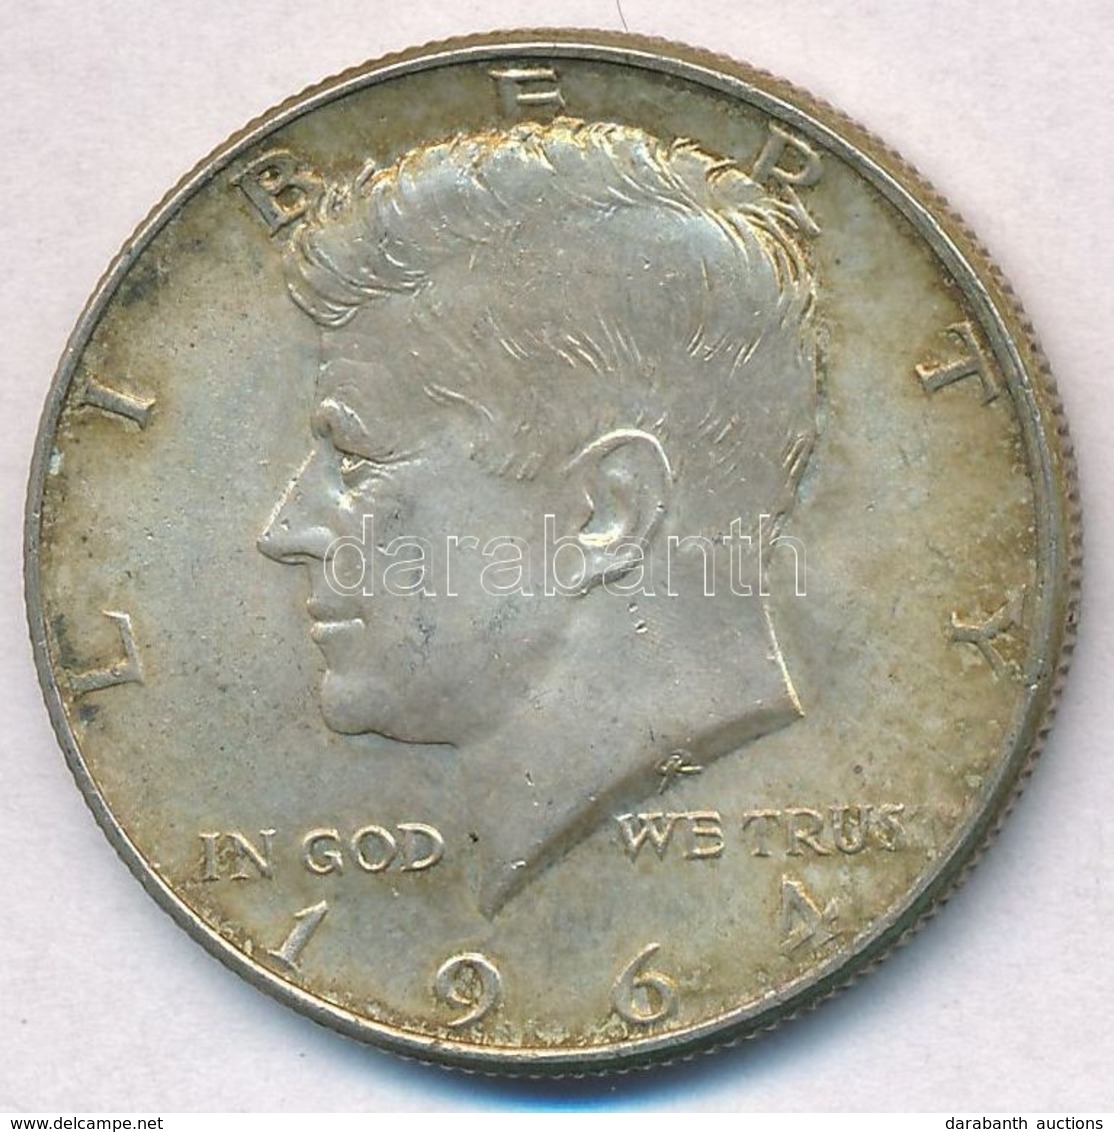 Amerikai Egyesült Államok 1964. 1/2$ Ag 'Kennedy' T:1-,2 Kis Patina
USA 1964. 1/2 Dollar Ag 'Kennedy' C:AU,XF Small Pati - Unclassified